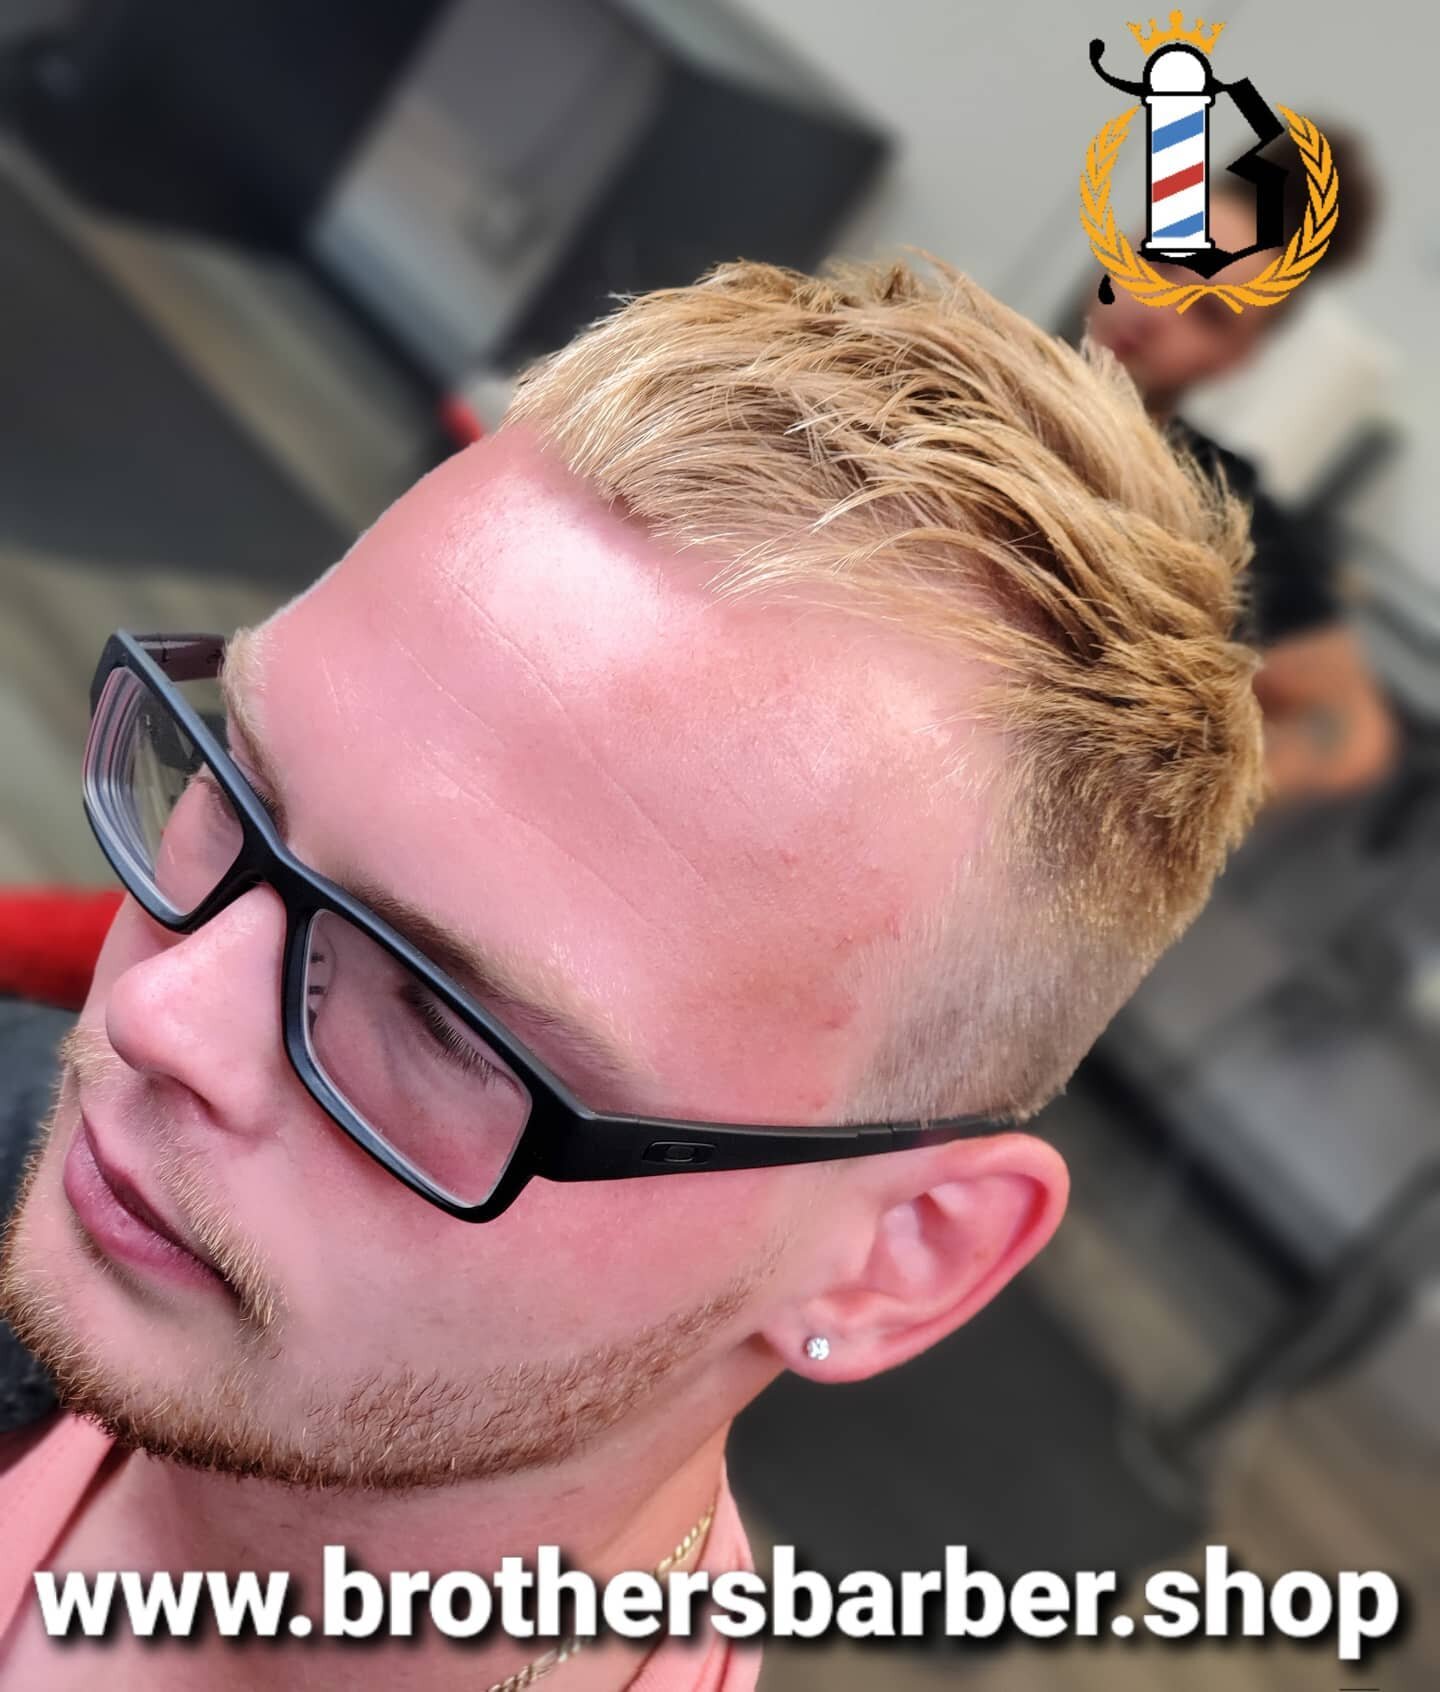 Schedule your appointment online at WWW.BROTHERSBARBER.SHOP
click the link in bio
#billsmafia
#716
#buffalolove 
#gobills
#onebuffalo
#barber
#buffalonewyork
#buffalohair
#barbershop
#williamsvilleny
#barbershopconnect
#hairstyle
#cutoftheday
#intern